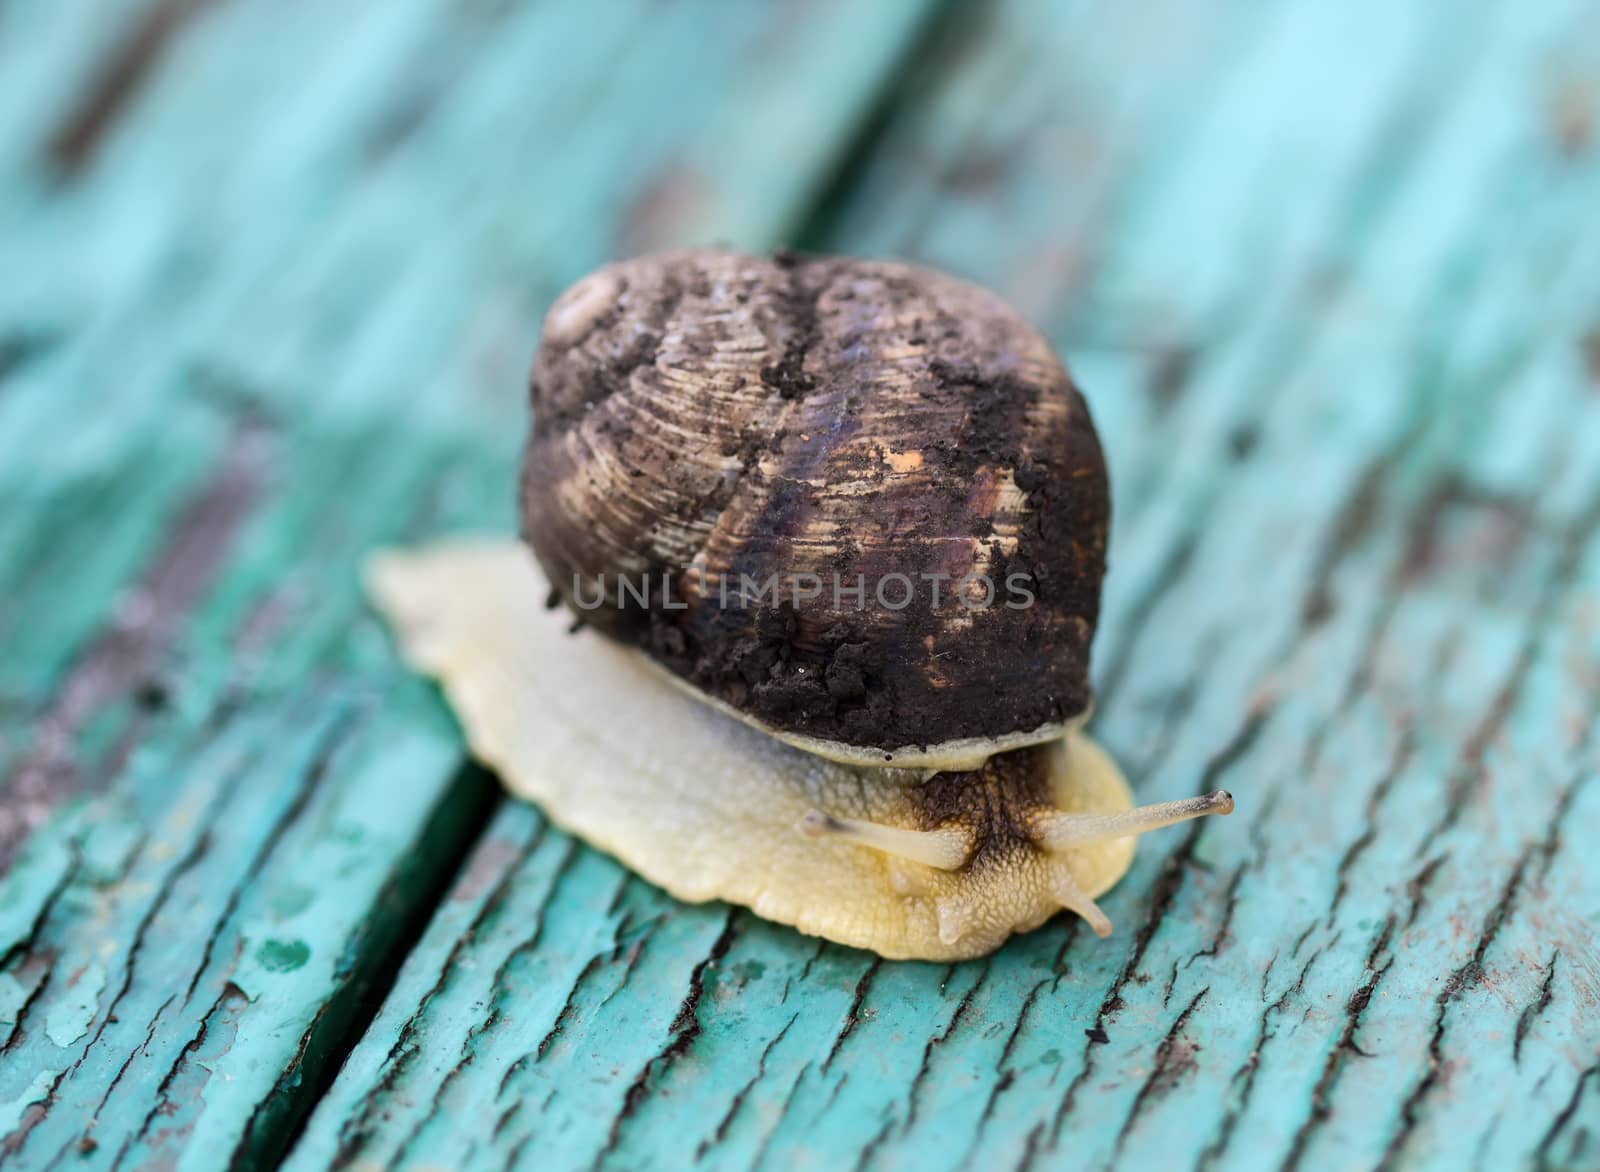 Snail by Valengilda